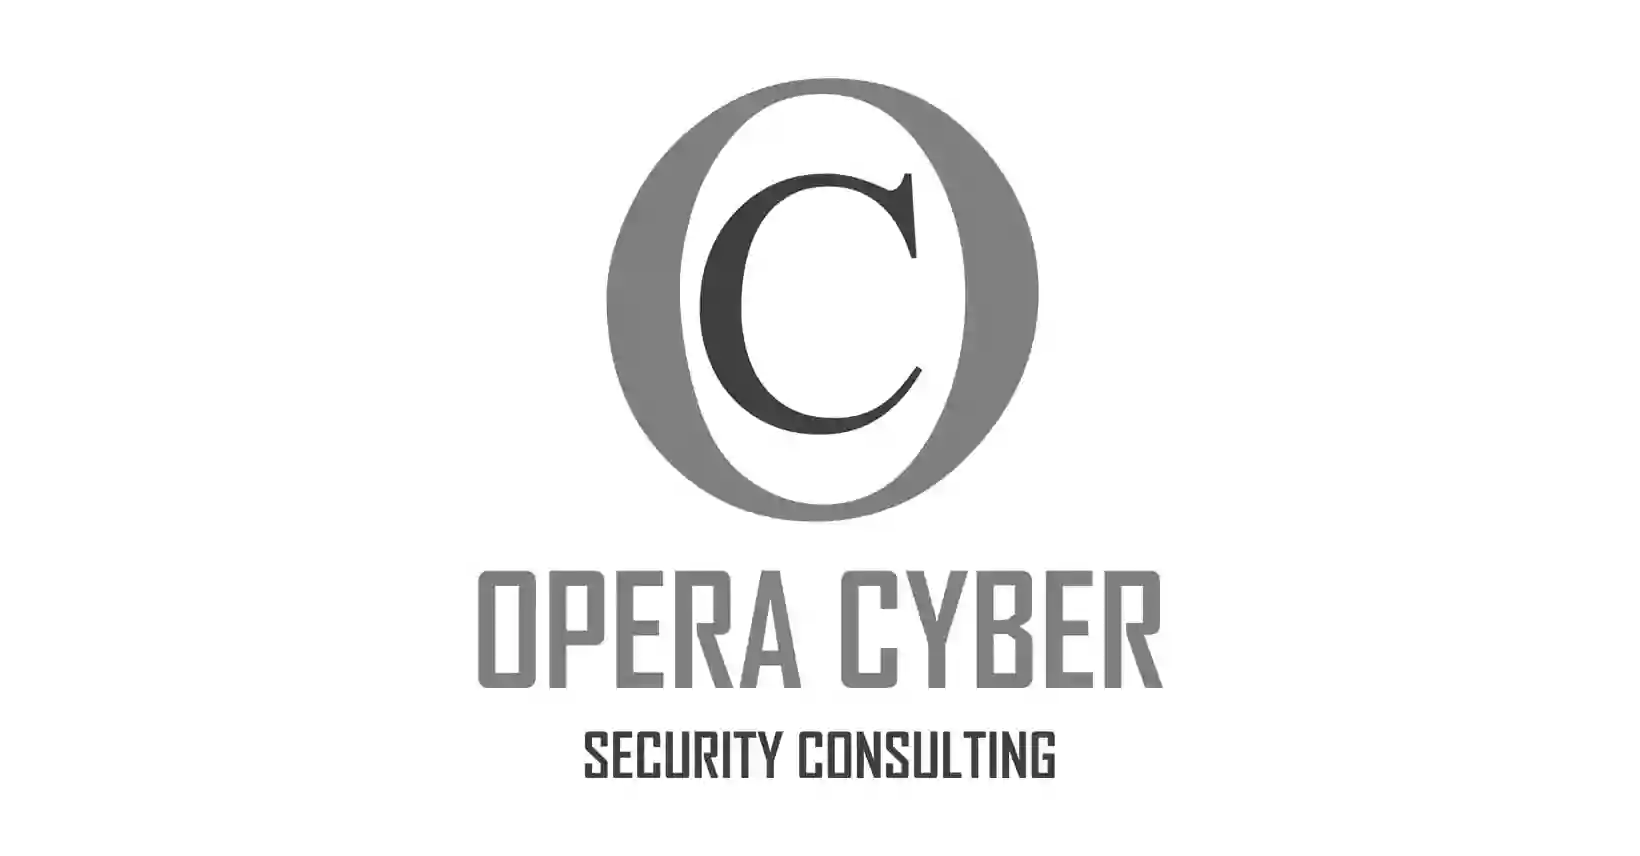 Opera Cyber